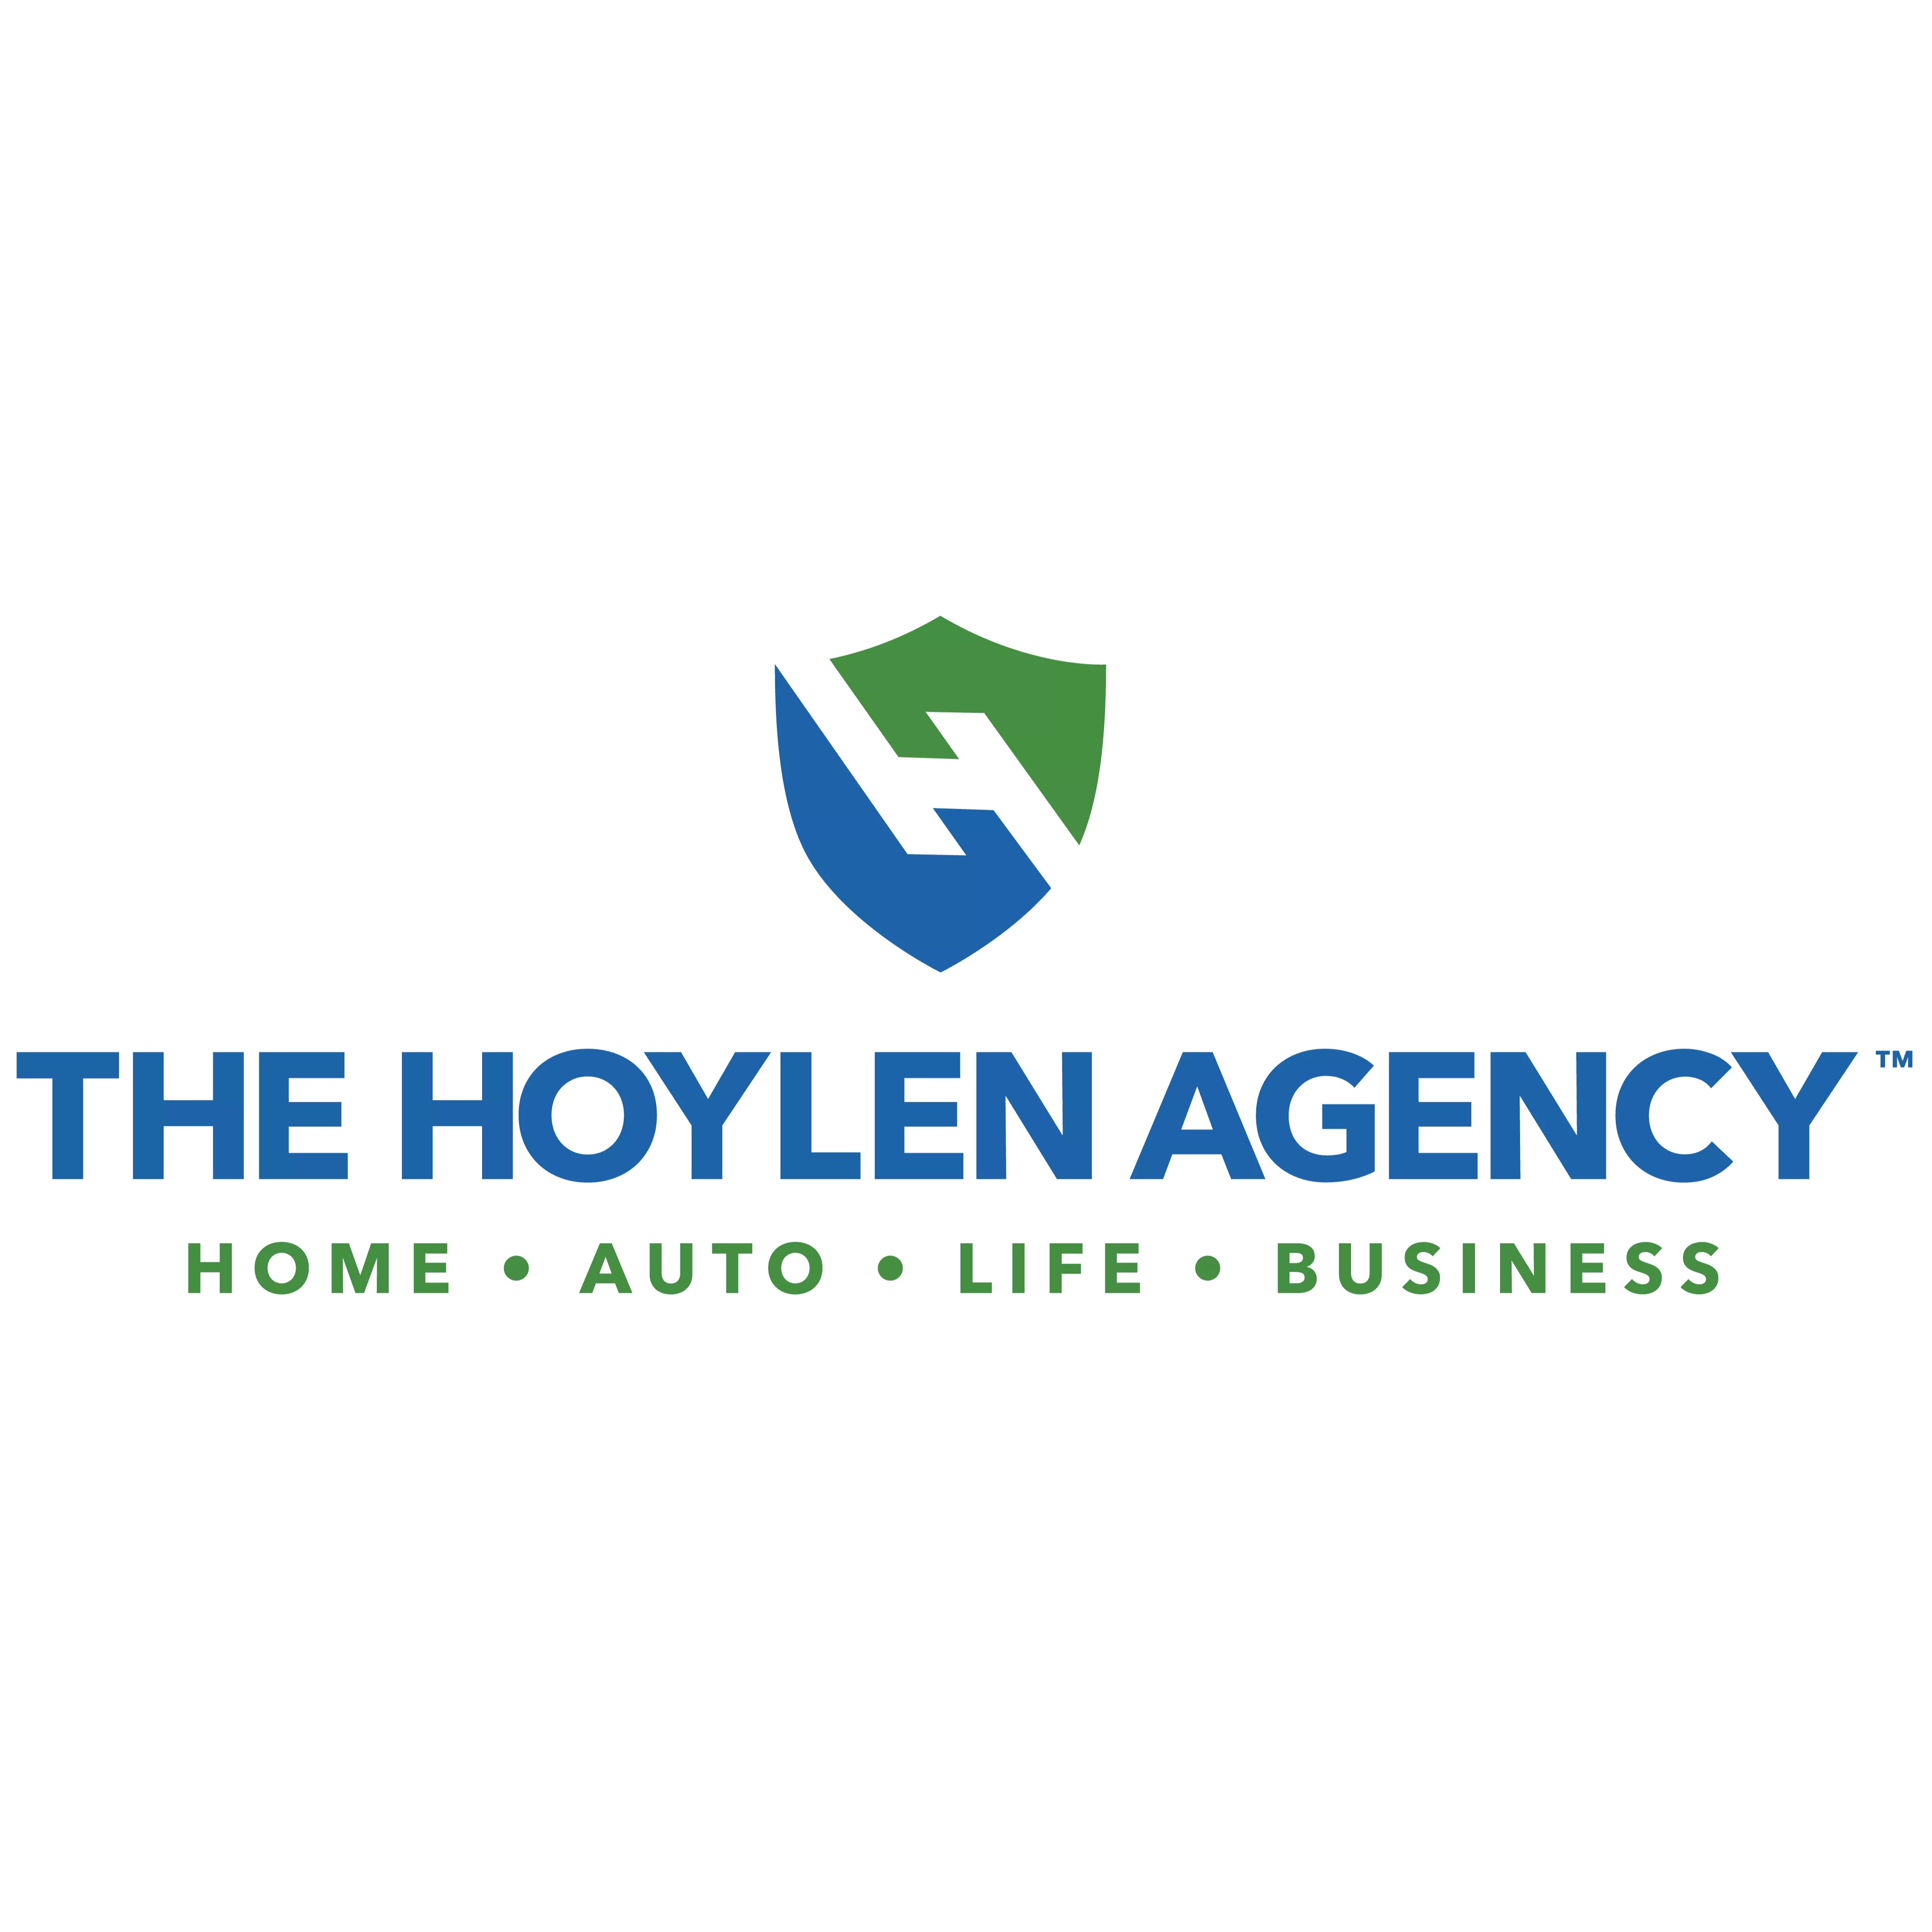 The Hoylen Agency - Nationwide Insurance